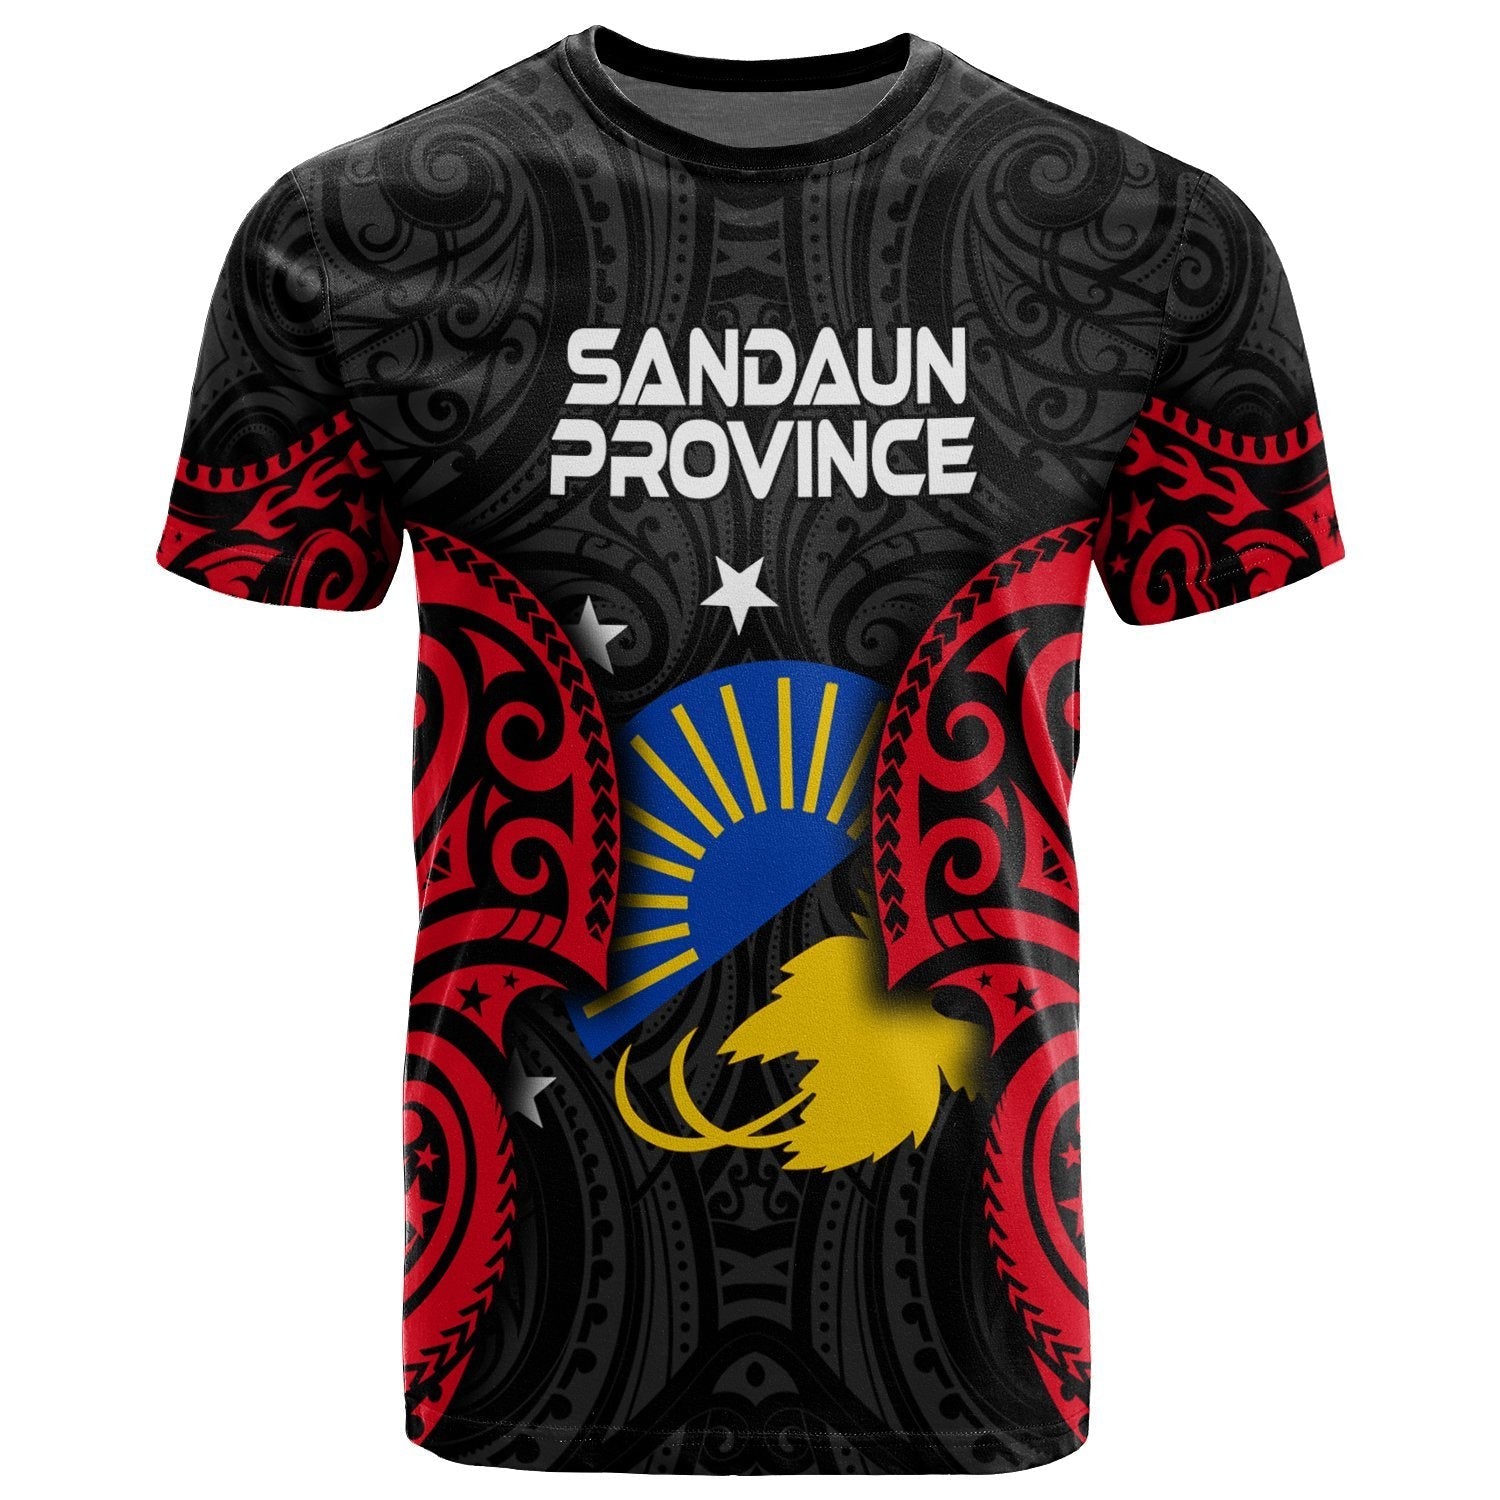 papua-new-guinea-sandaun-province-polynesian-t-shirt-spirit-version